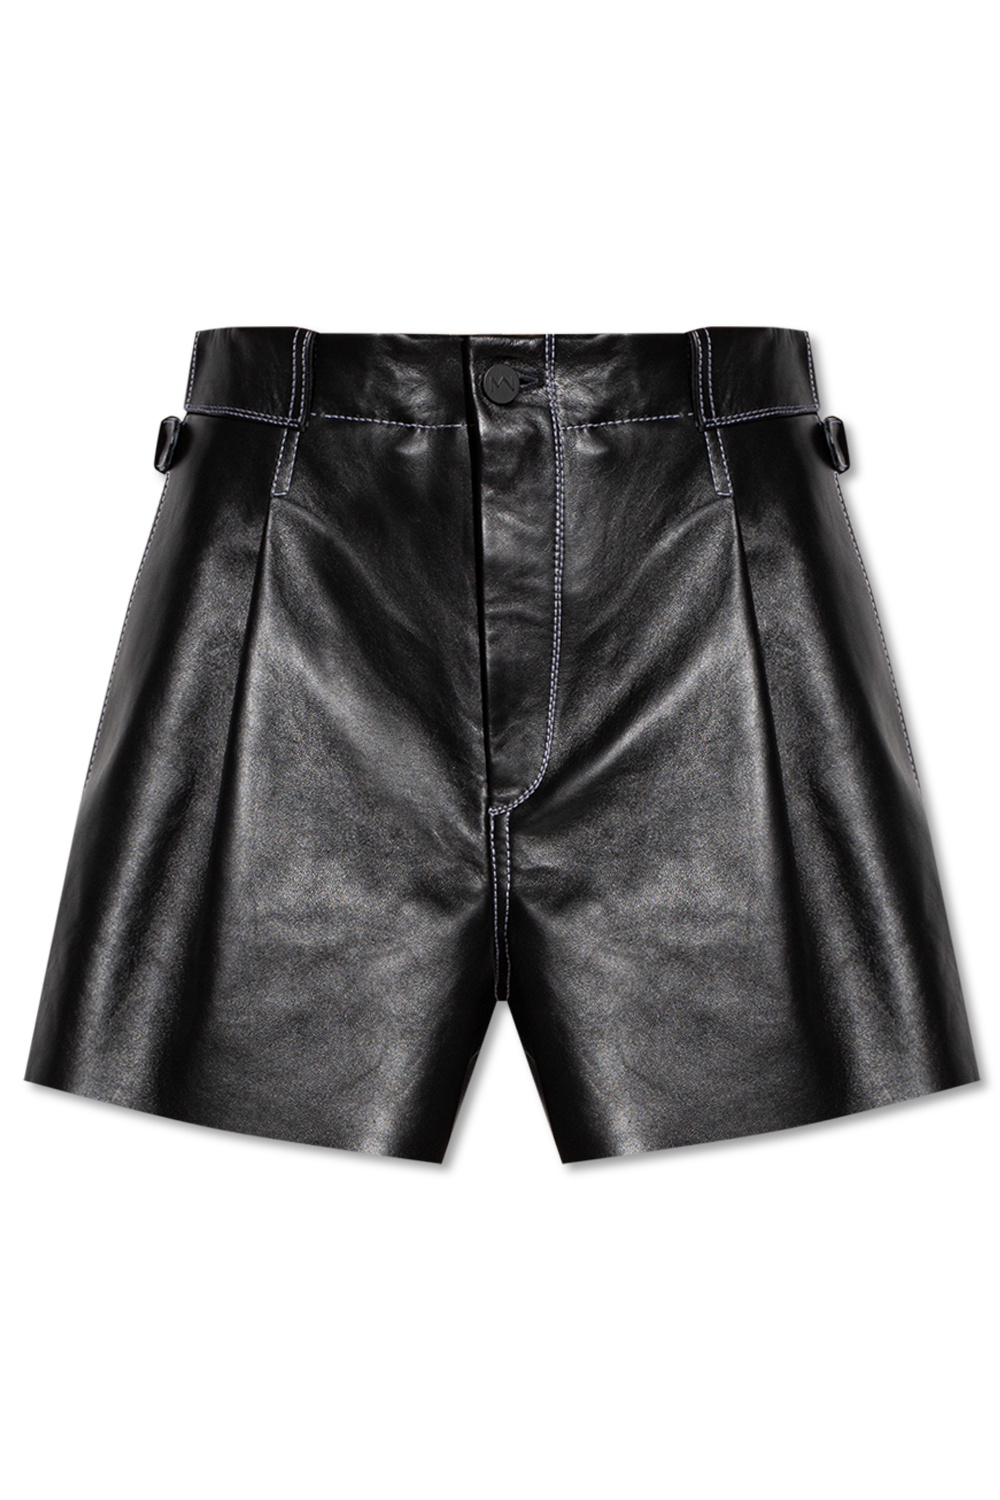 The Mannei ‘Sakib’ leather Perla shorts